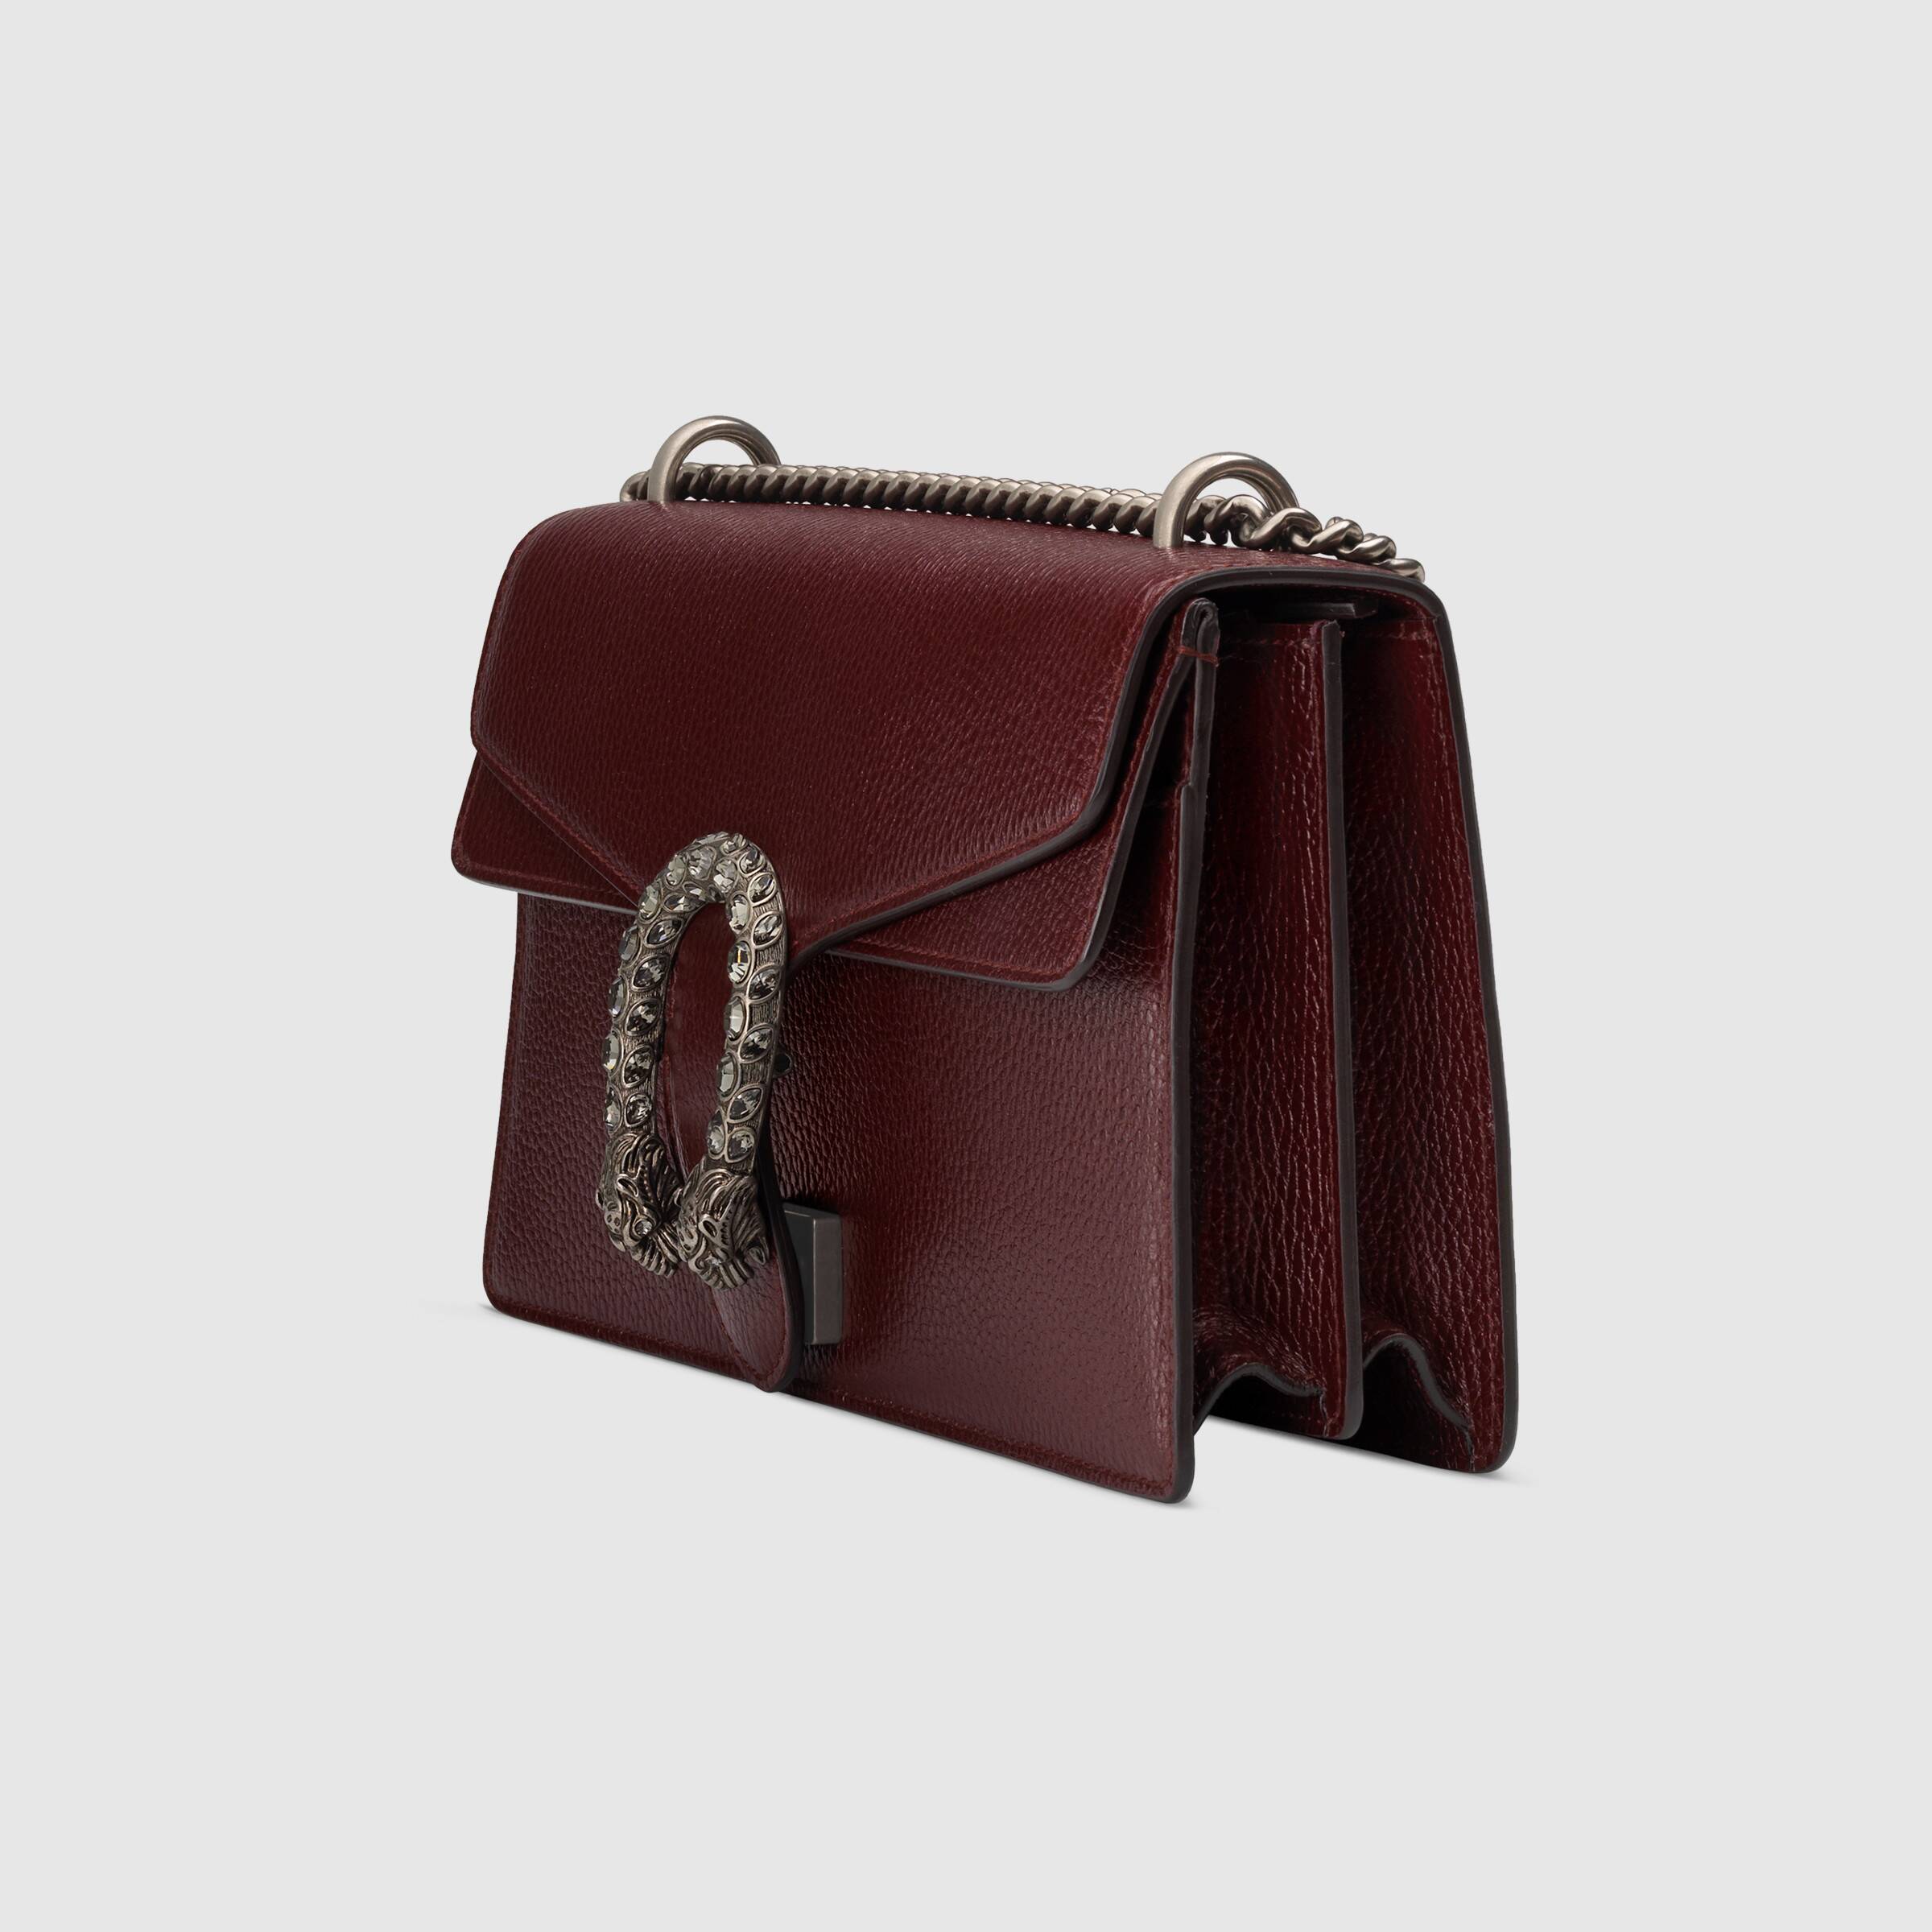 Gucci Dionysus Small Shoulder Bag Burgundy Leather